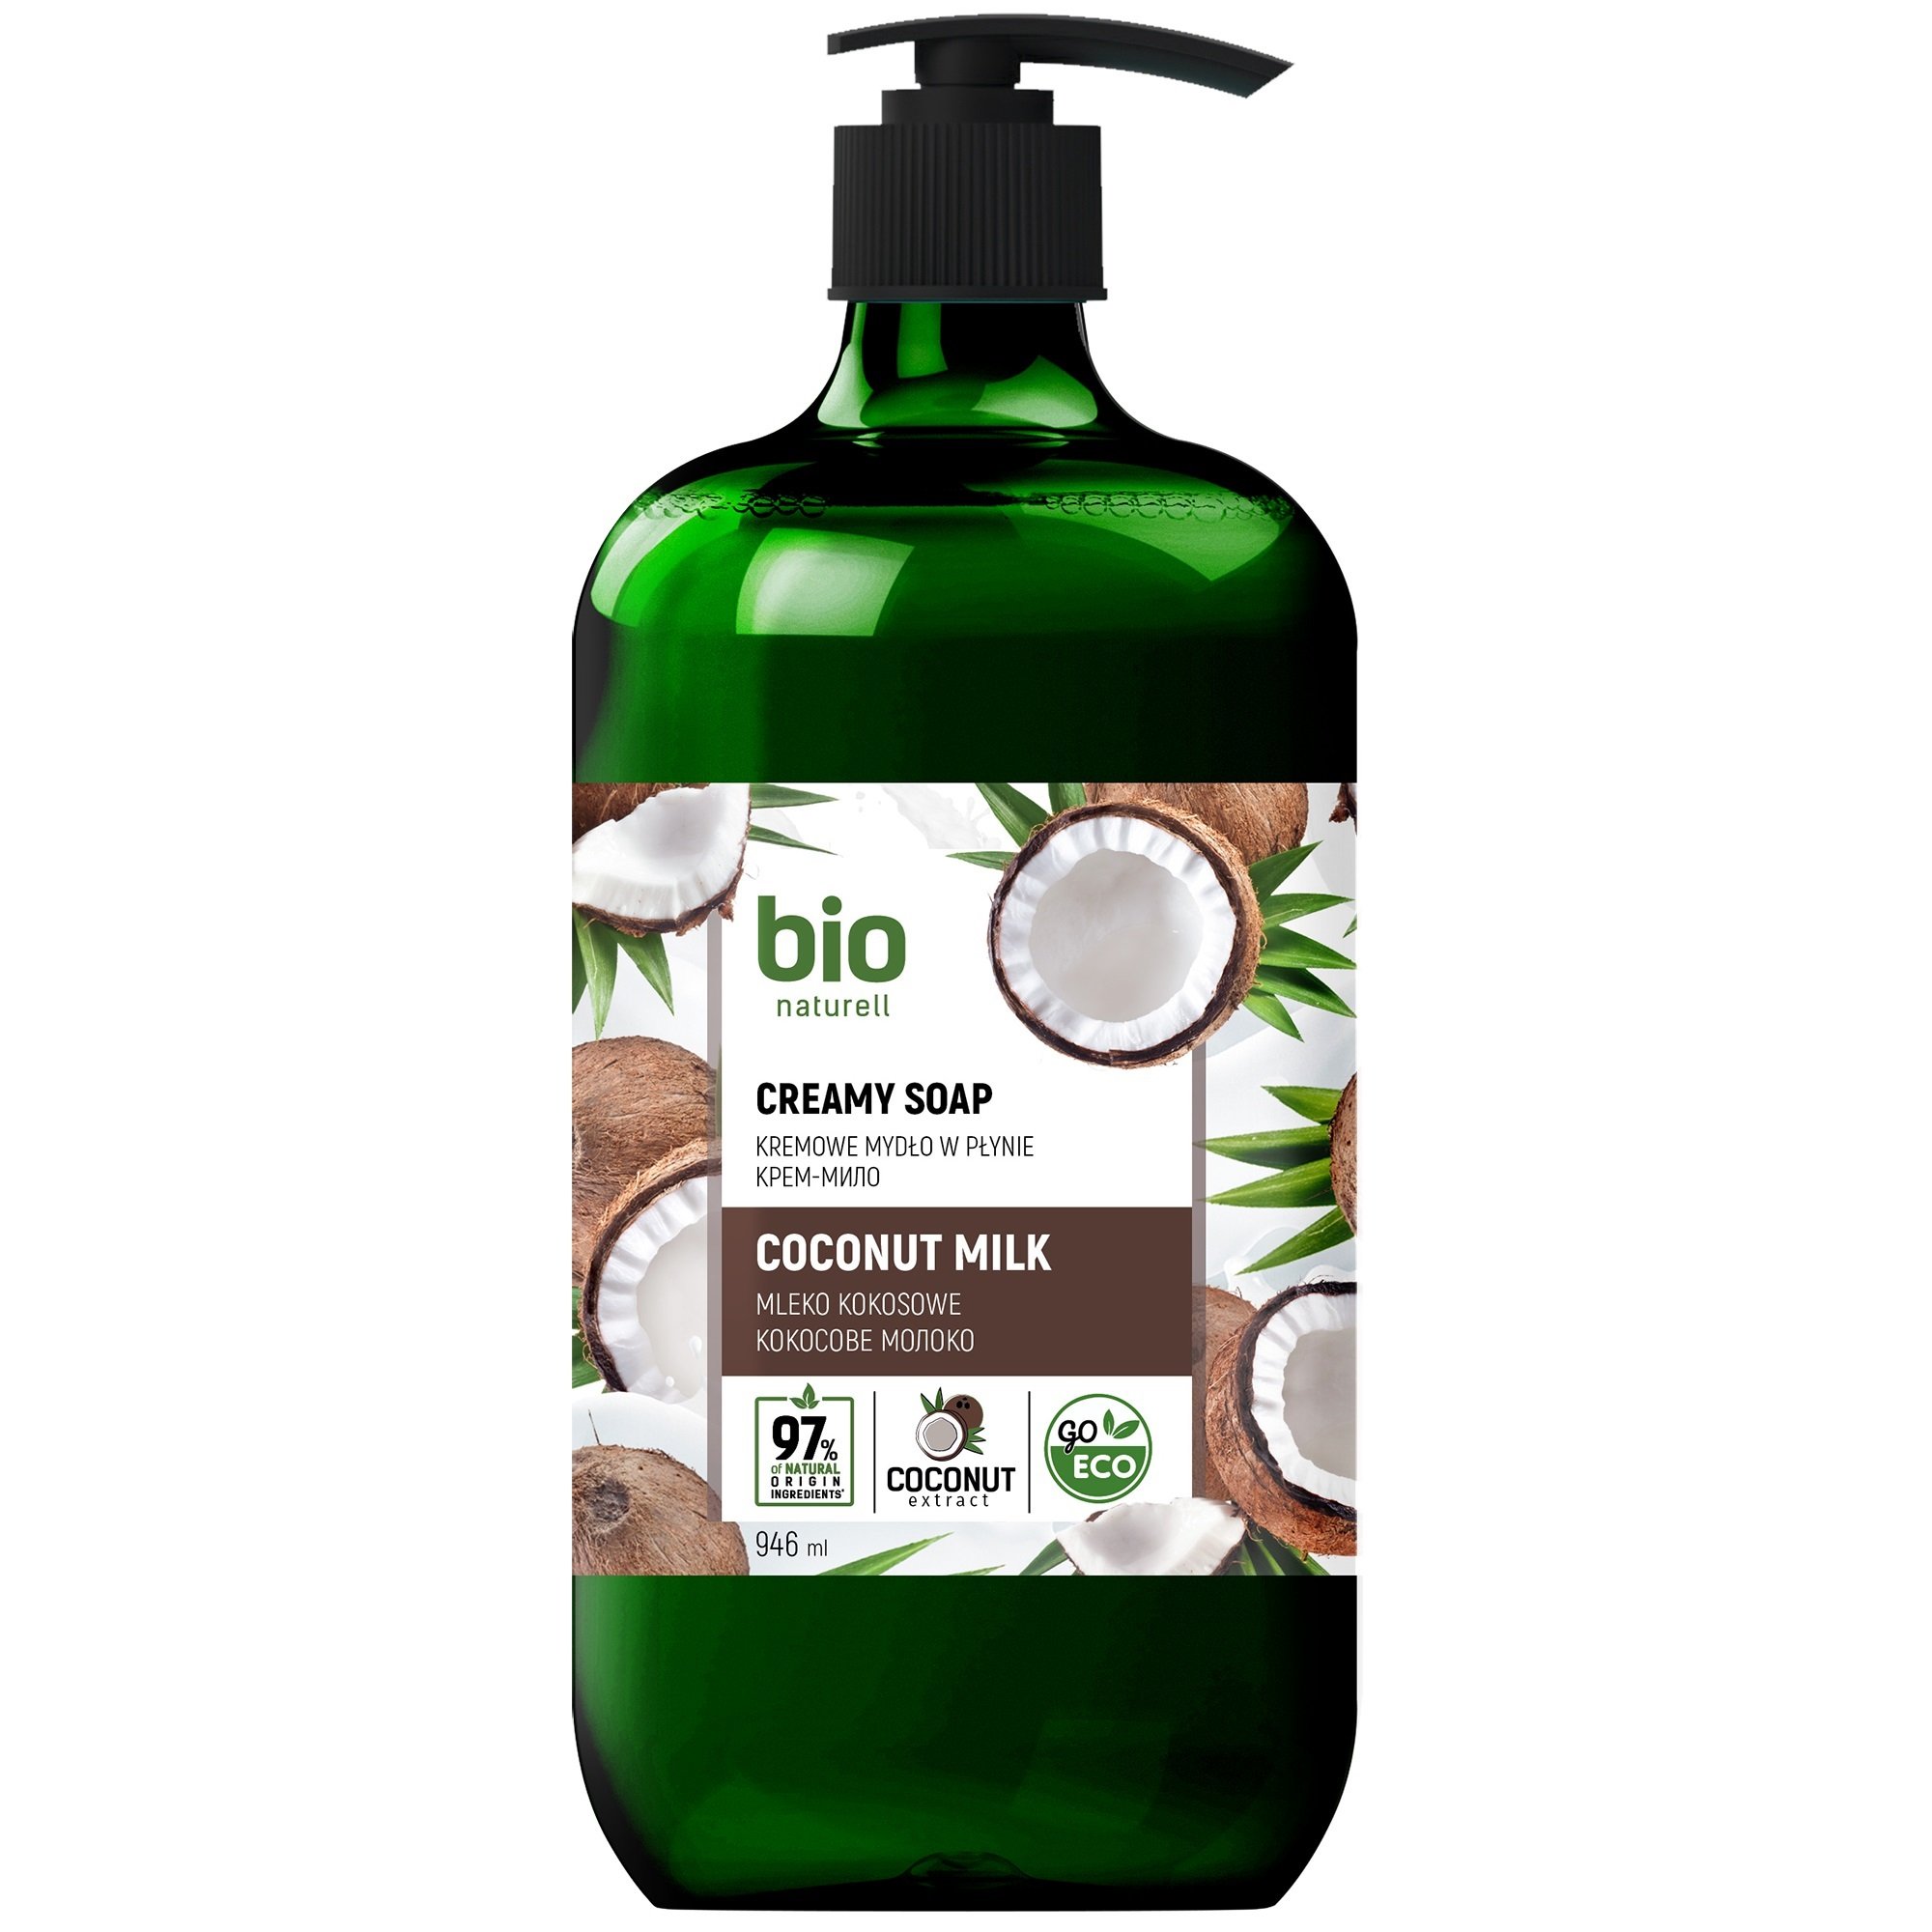 Крем-мыло Bio Naturell Coconut milk Creamy soap with Pump, 946 мл - фото 1